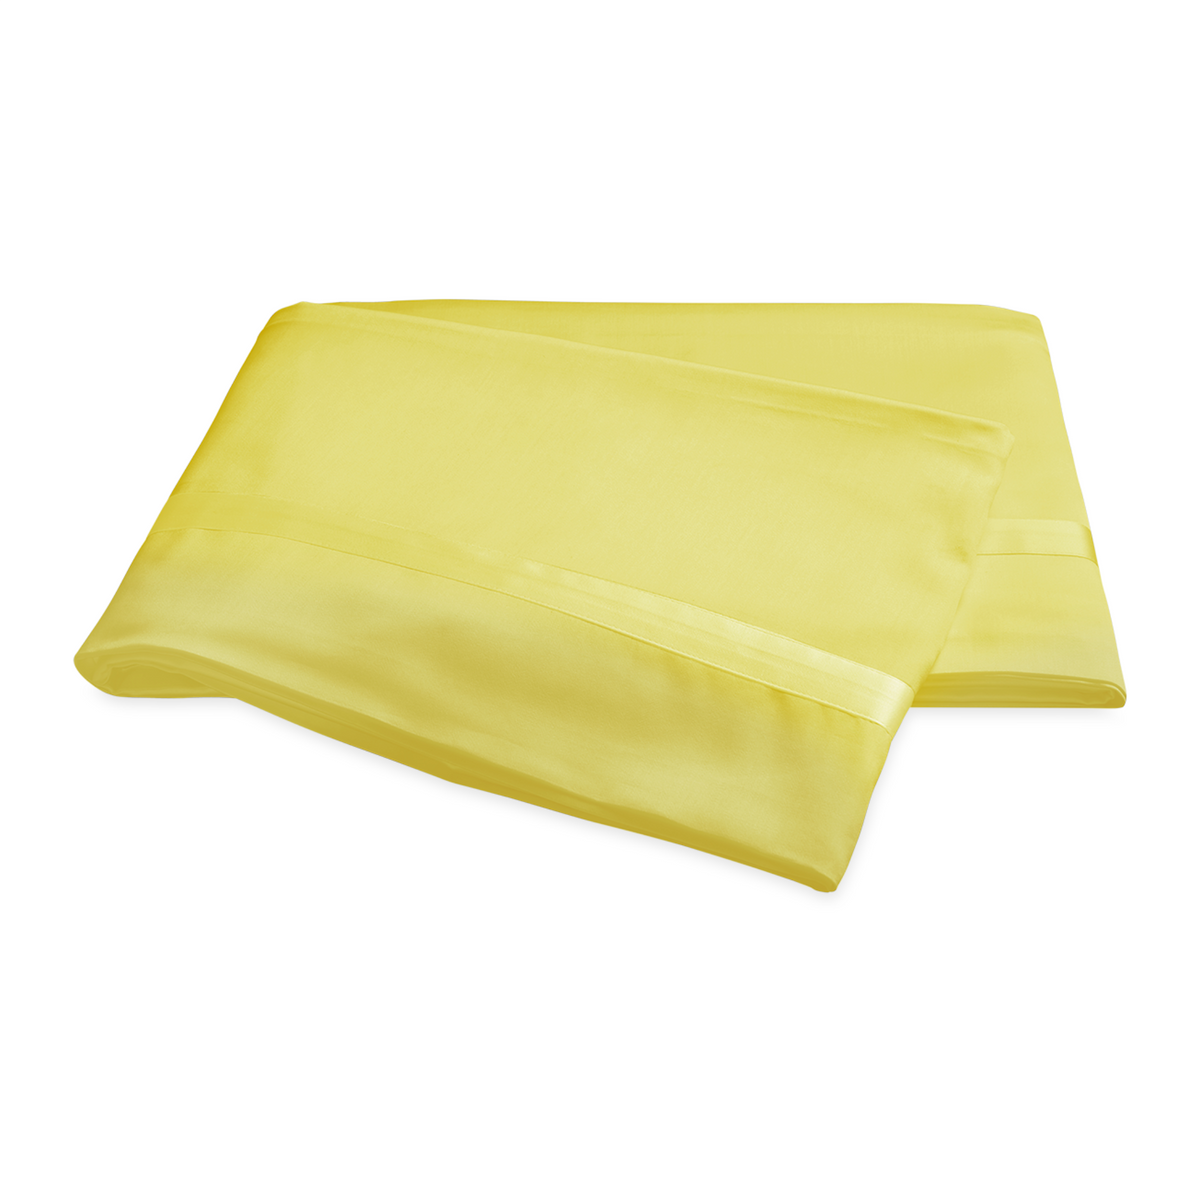 Folded Flat Sheet of Matouk Nocturne Bedding in Lemon Color